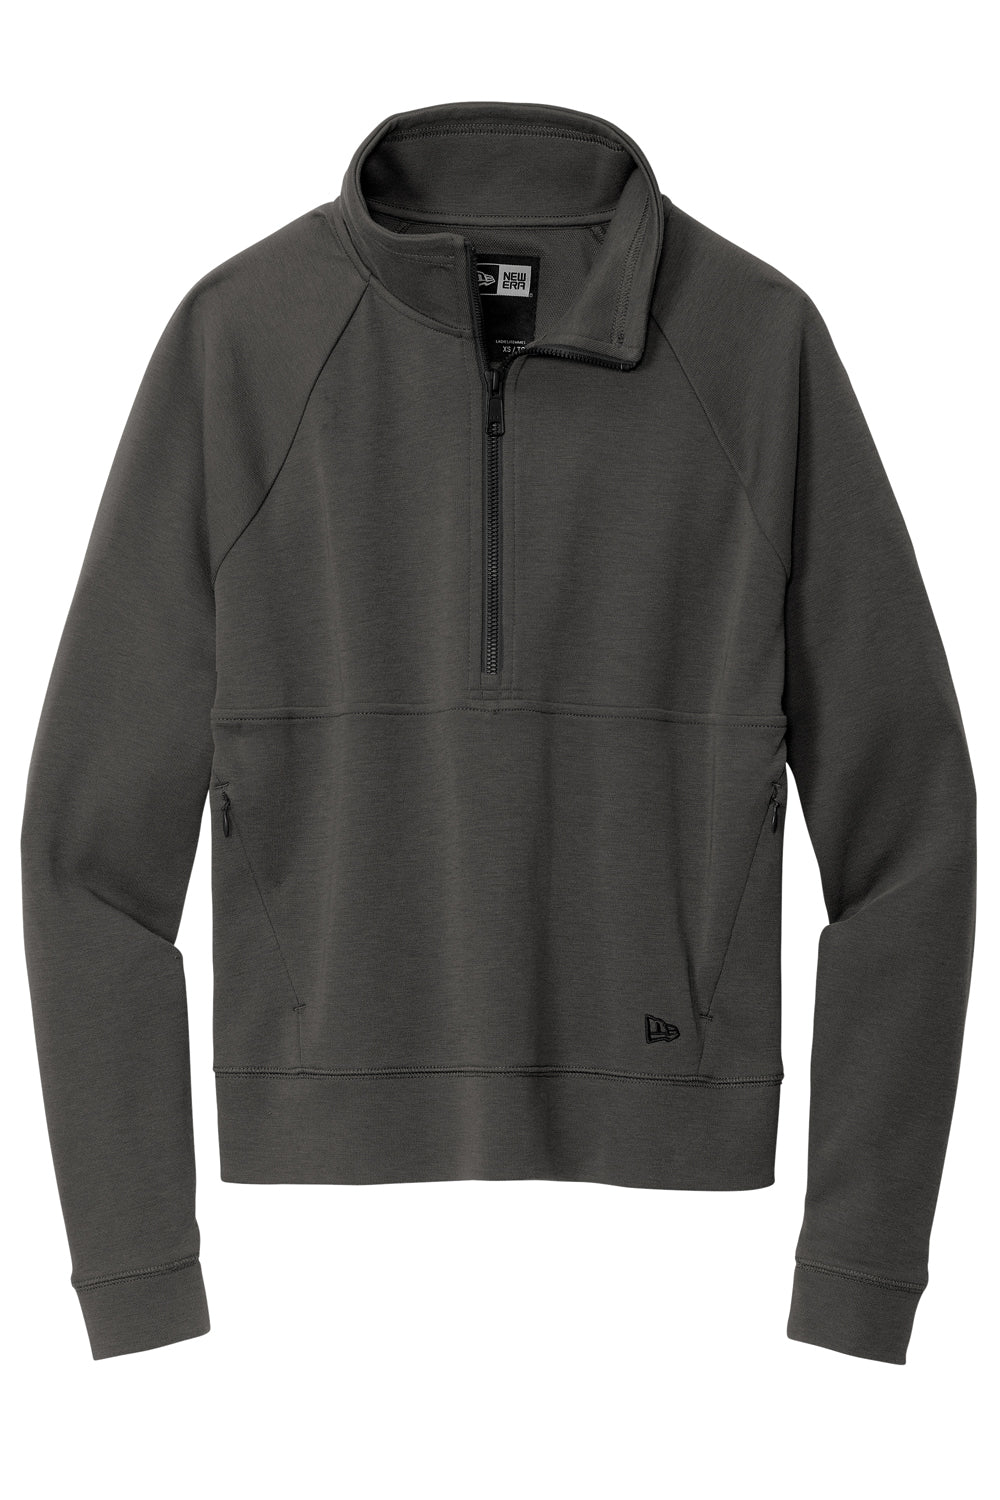 New Era LNEA541 Mens STS 1/4 Zip Sweatshirt Graphite Grey Flat Front